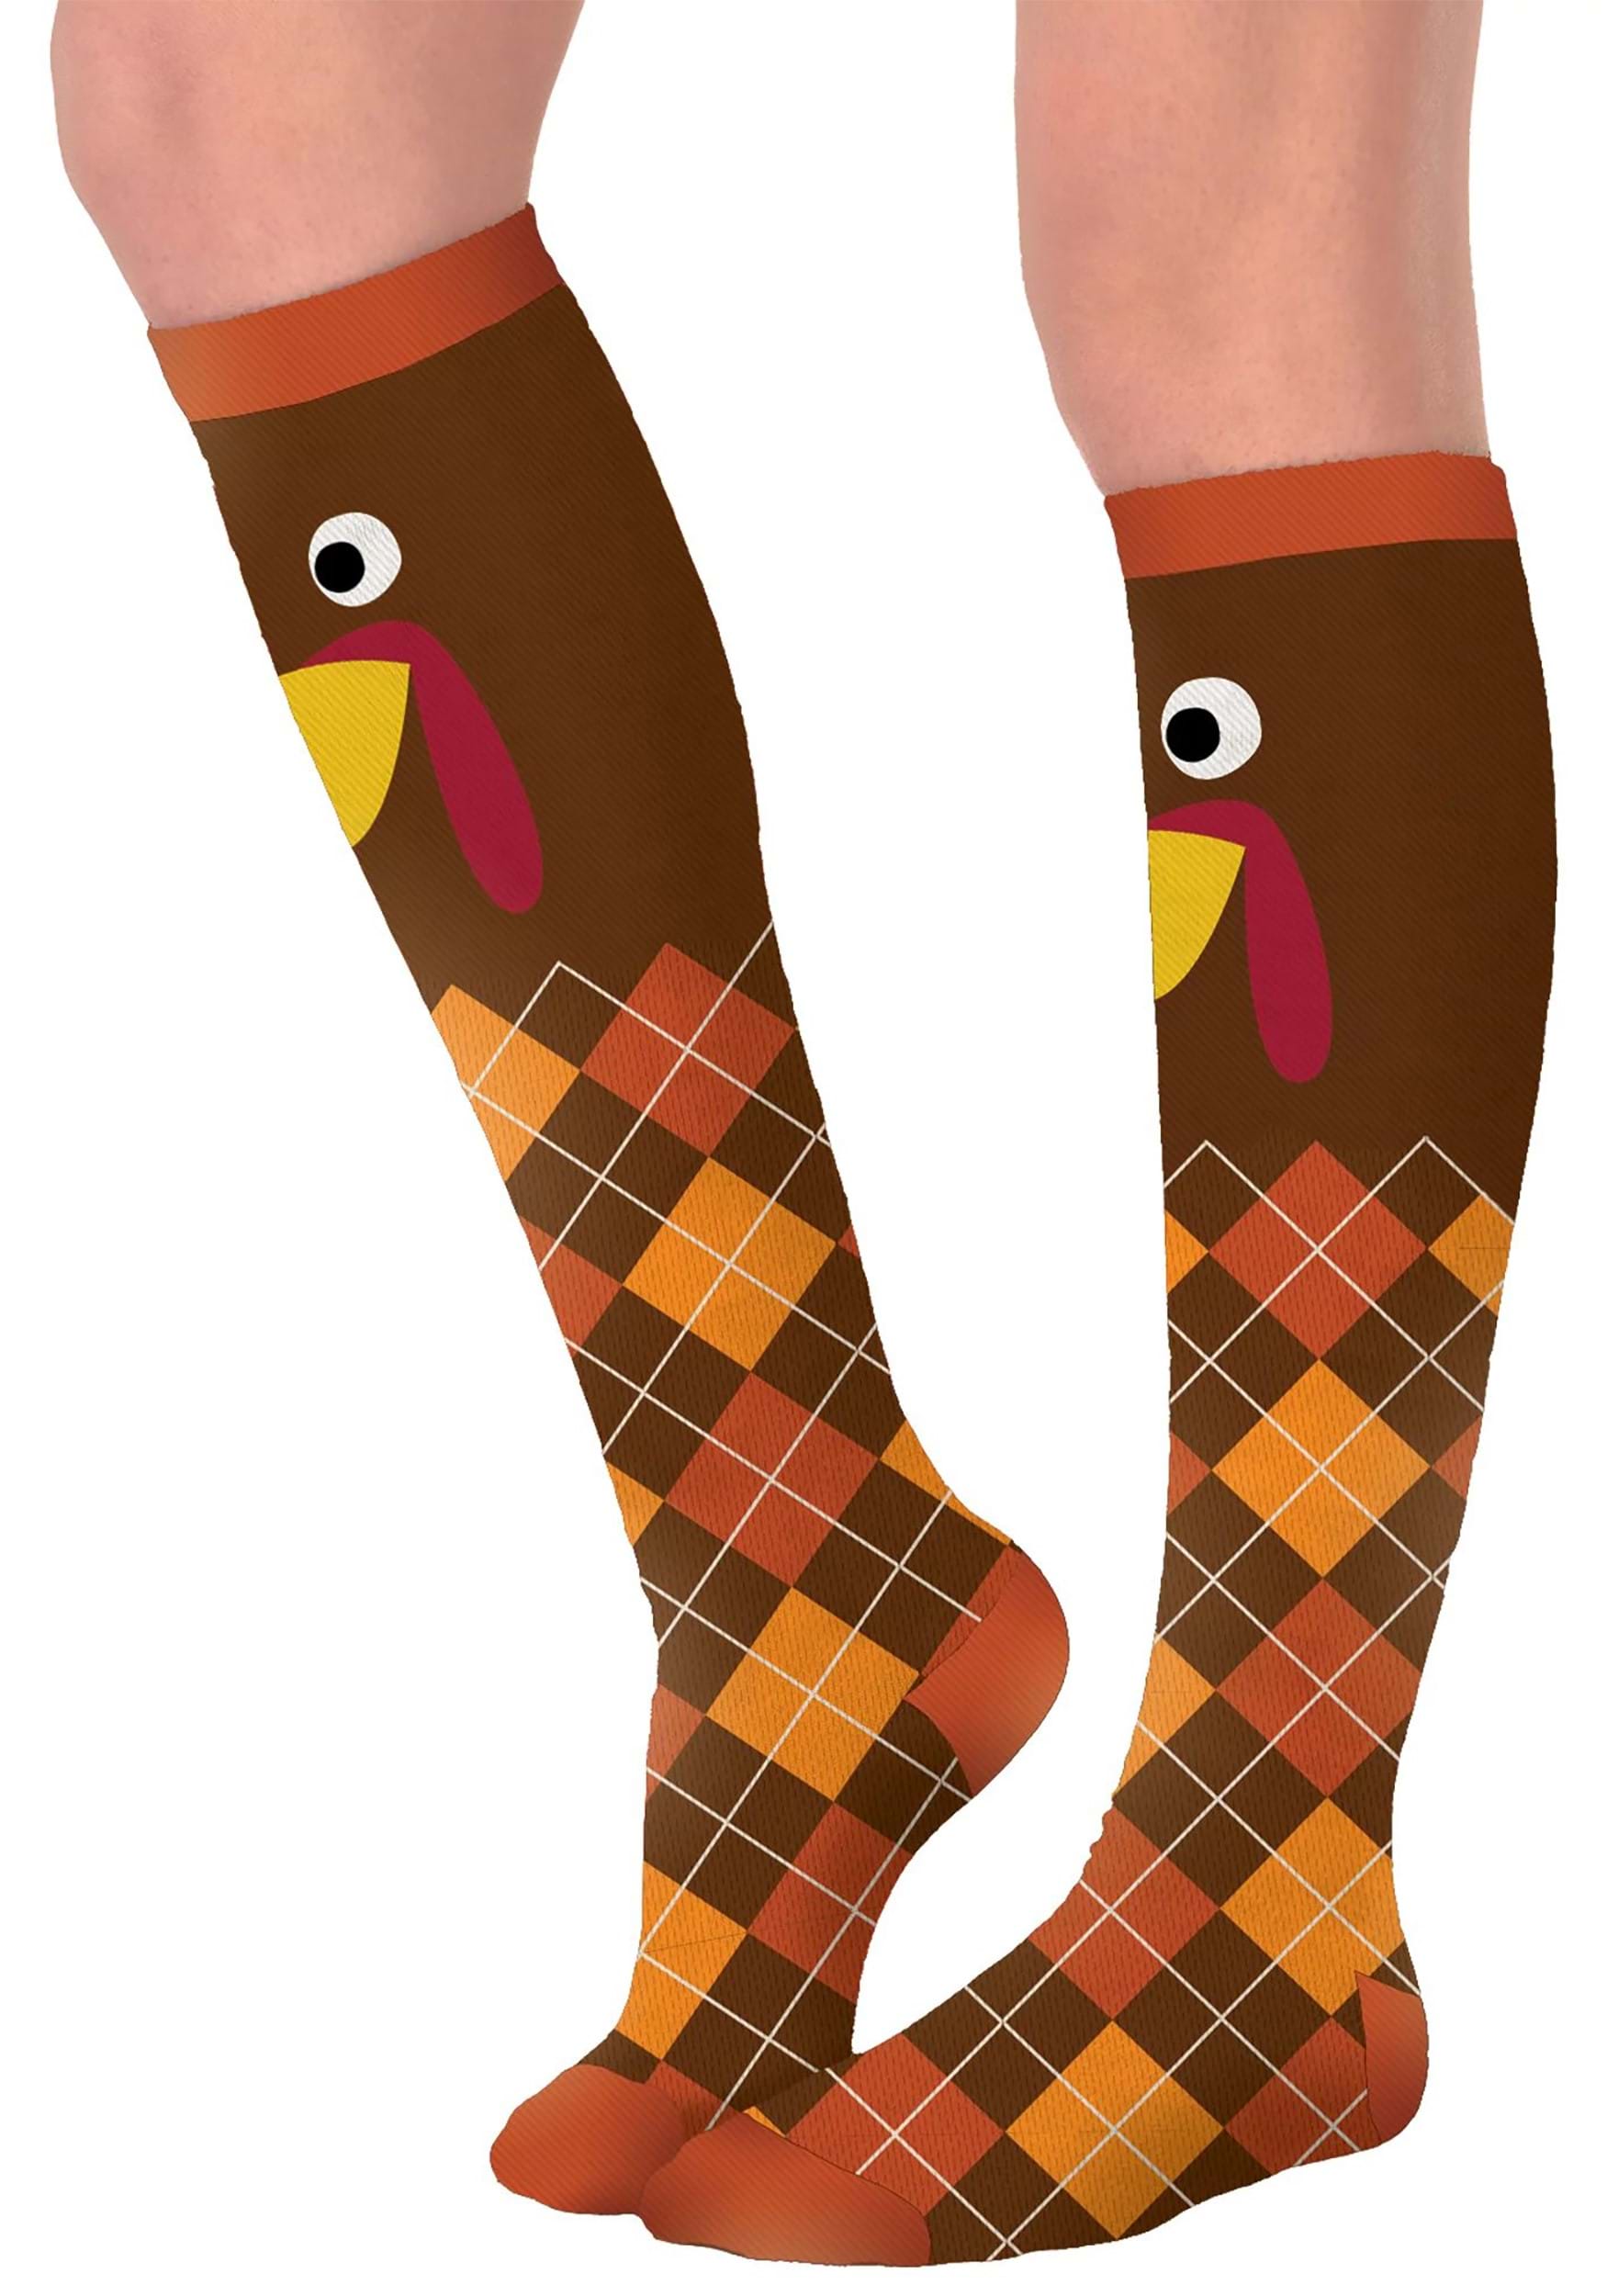 Thanksgiving TurkeyWomen Creative Comfortable Knee High Athletic Knee High Socks 